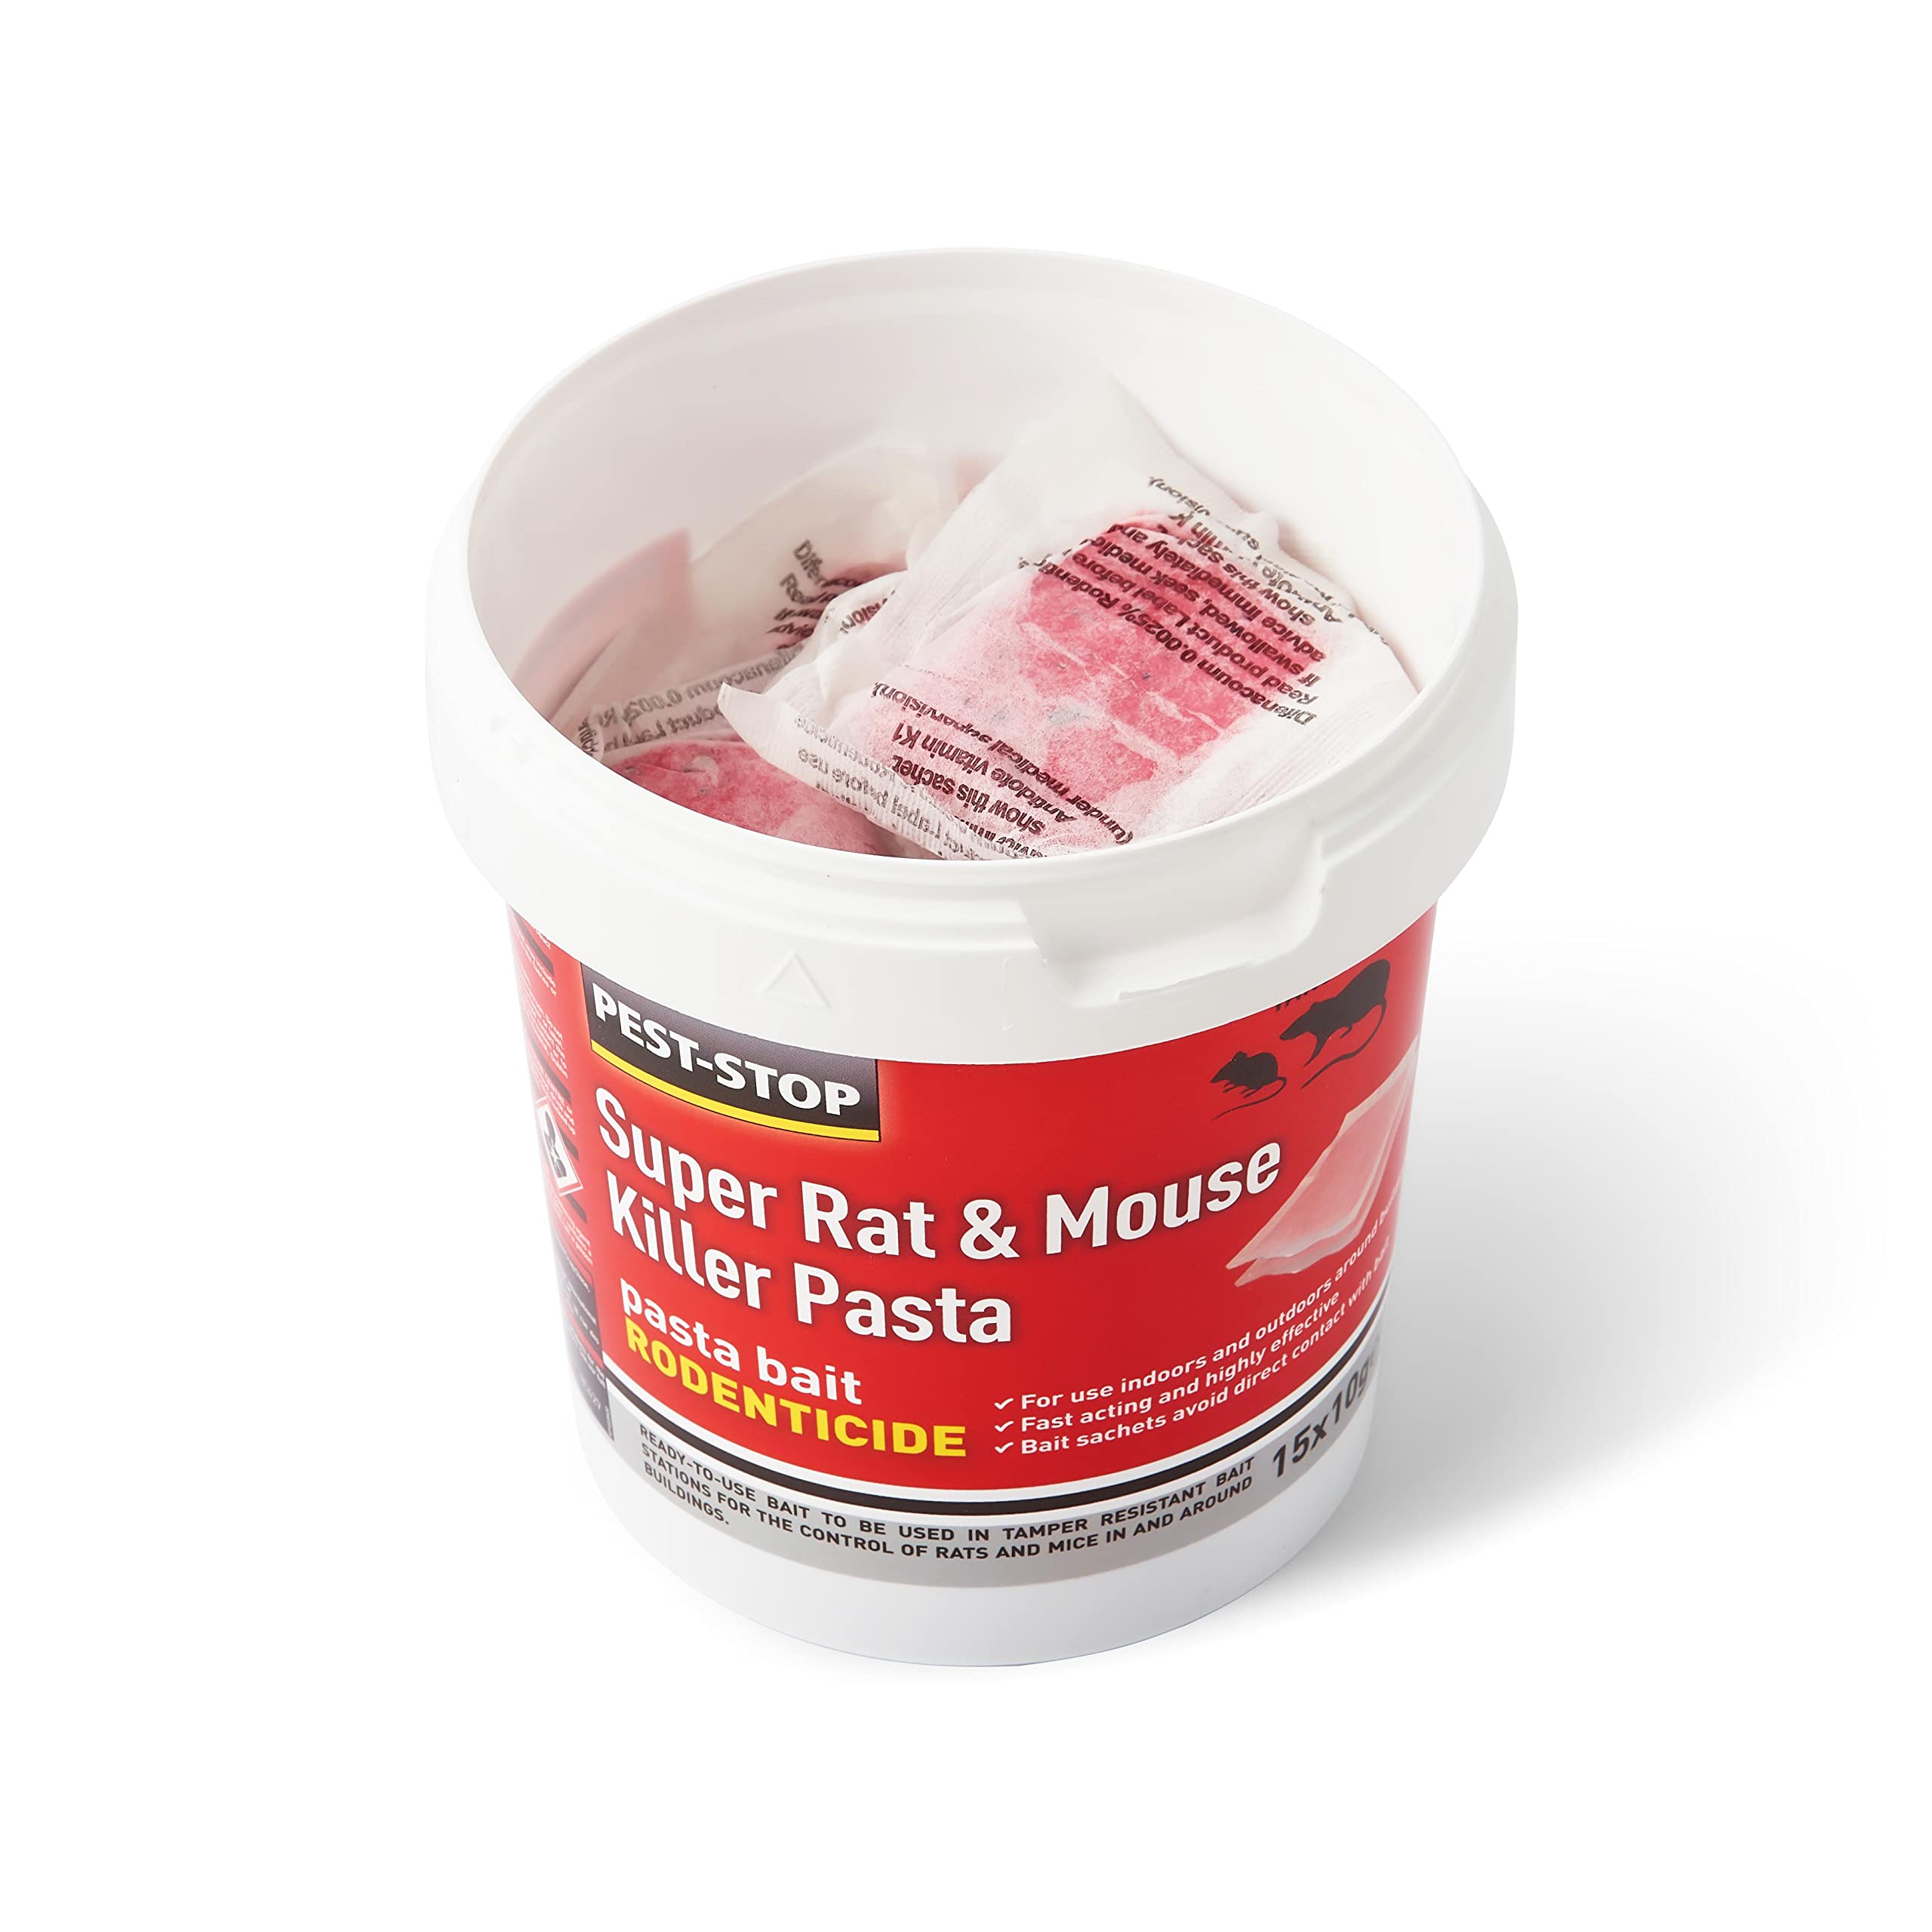 Pest Stop Super Rat & Mouse Killer Pasta Bait - Baits for Mouse Rat - Mice Killer - Rat Control for Home, Office, Garden, Industry - (15 x 10g)